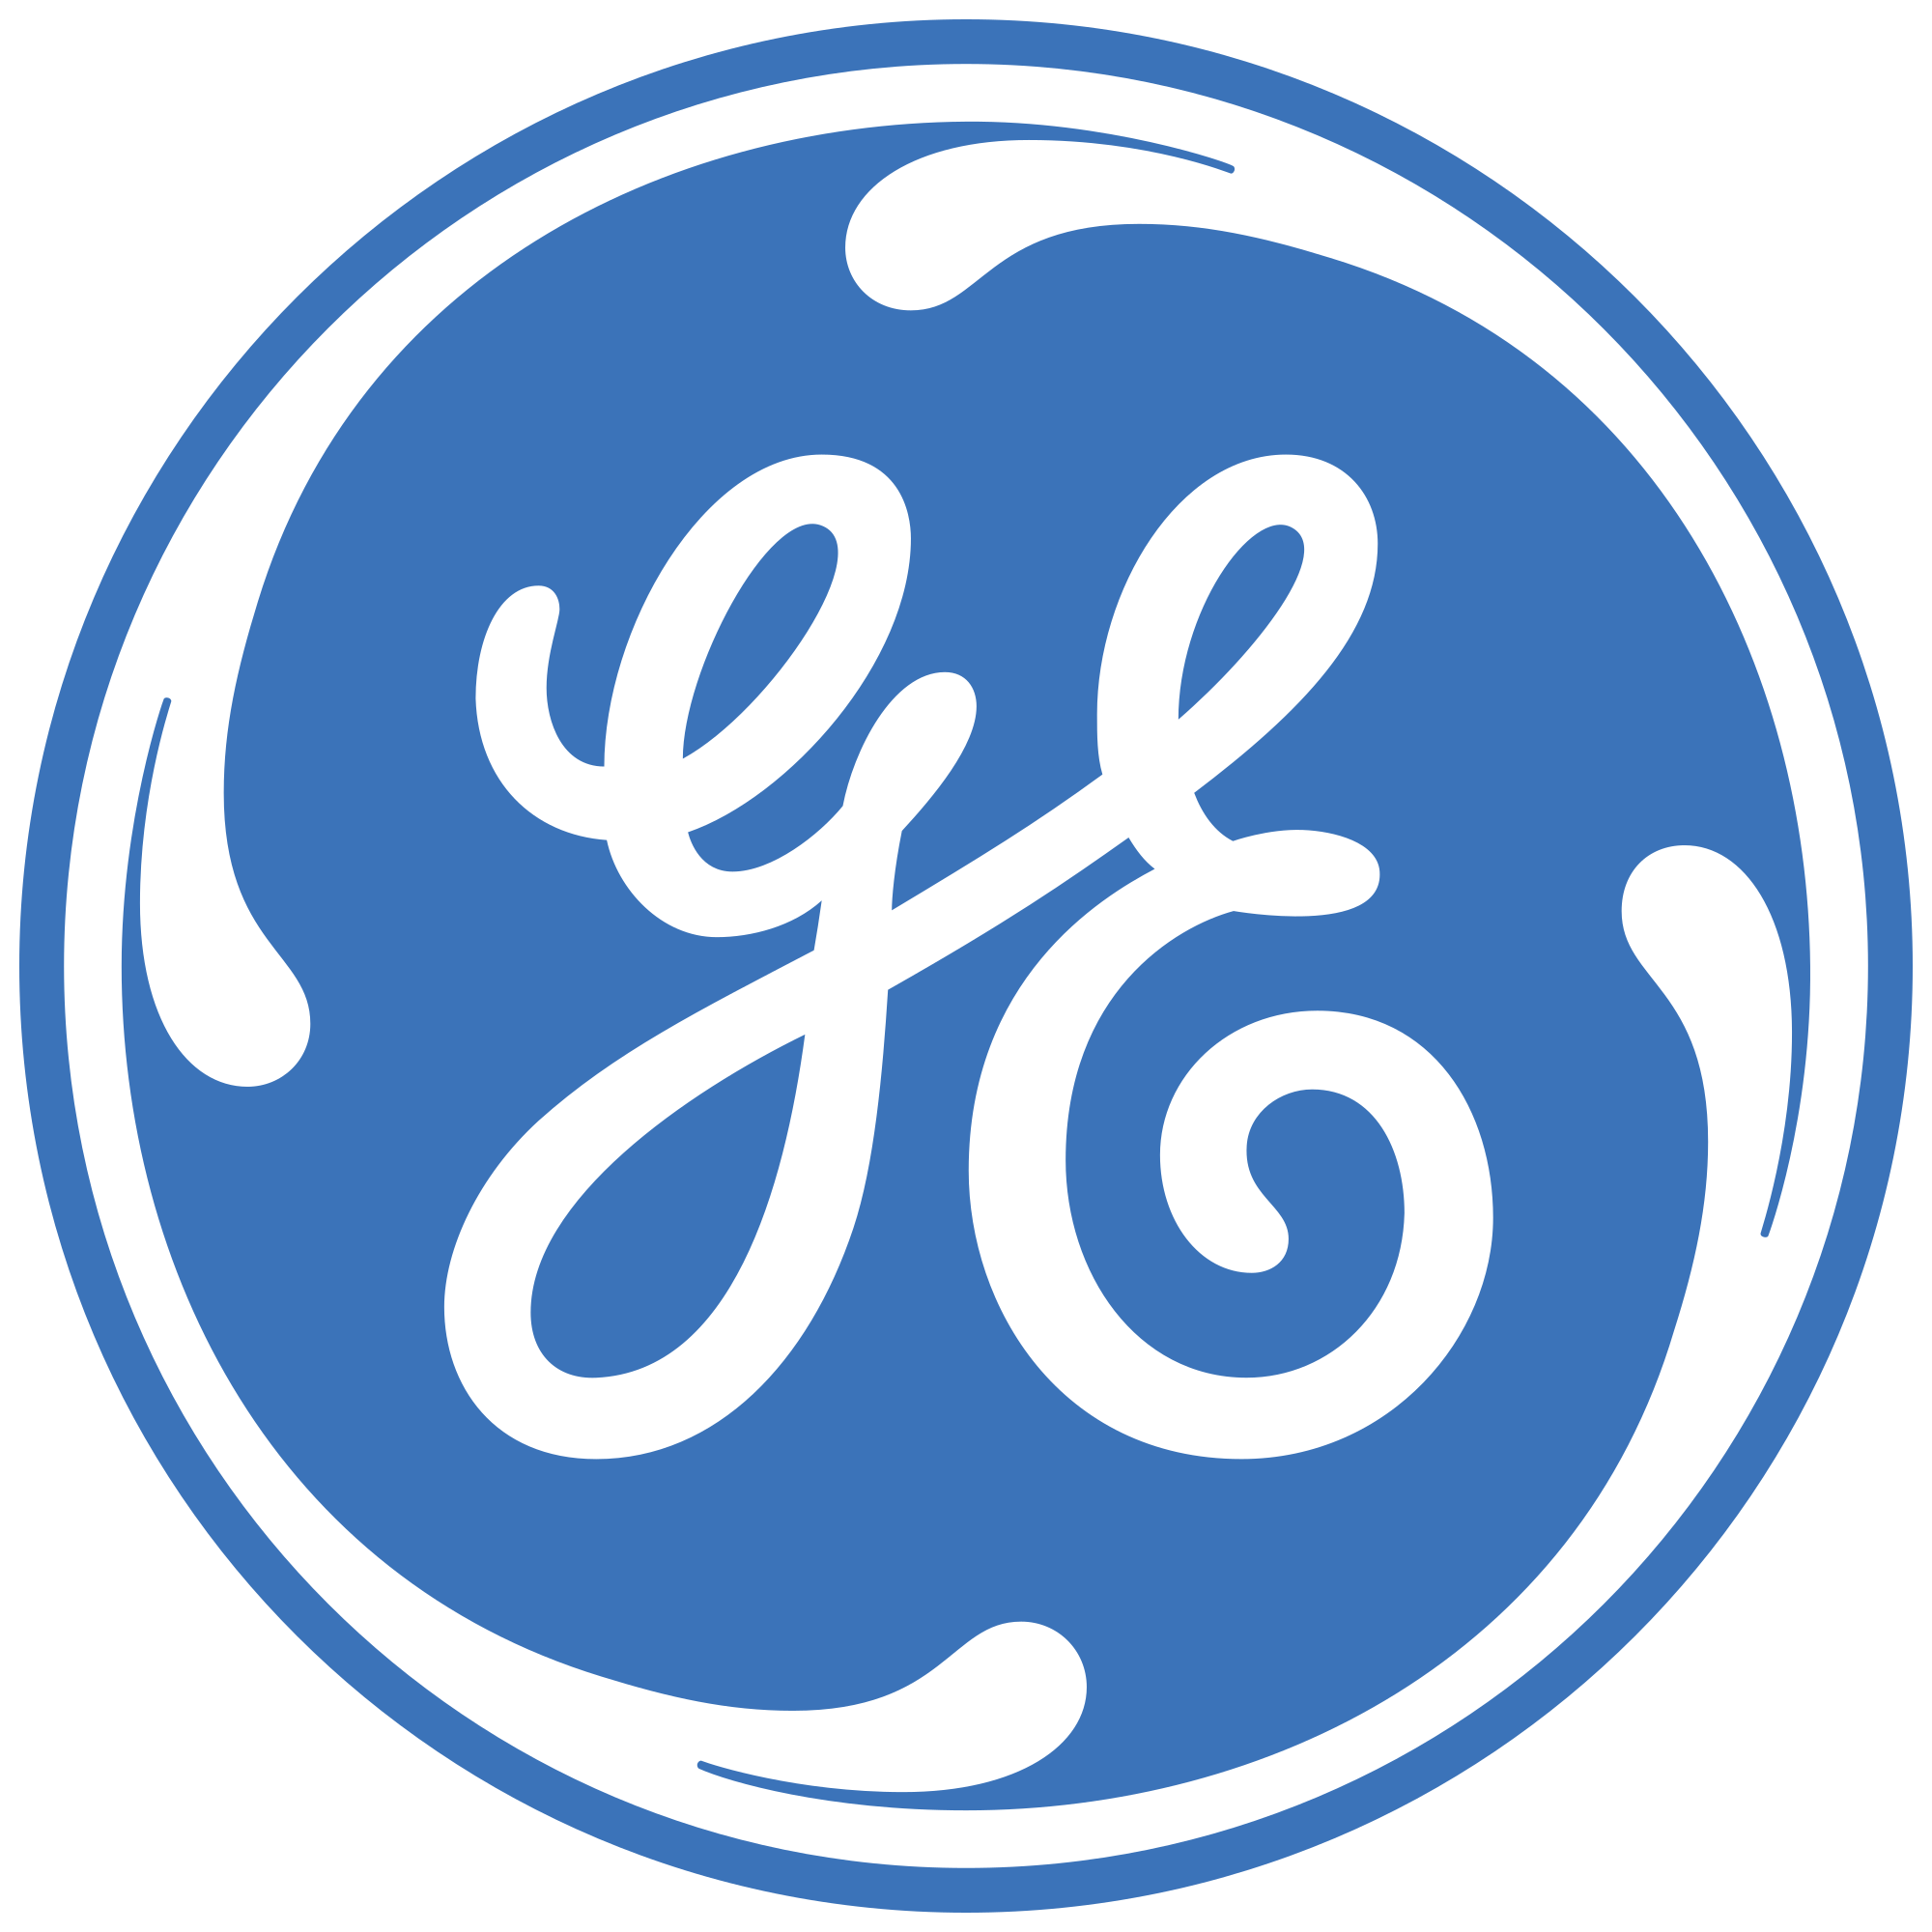 General Electric (GE) logo